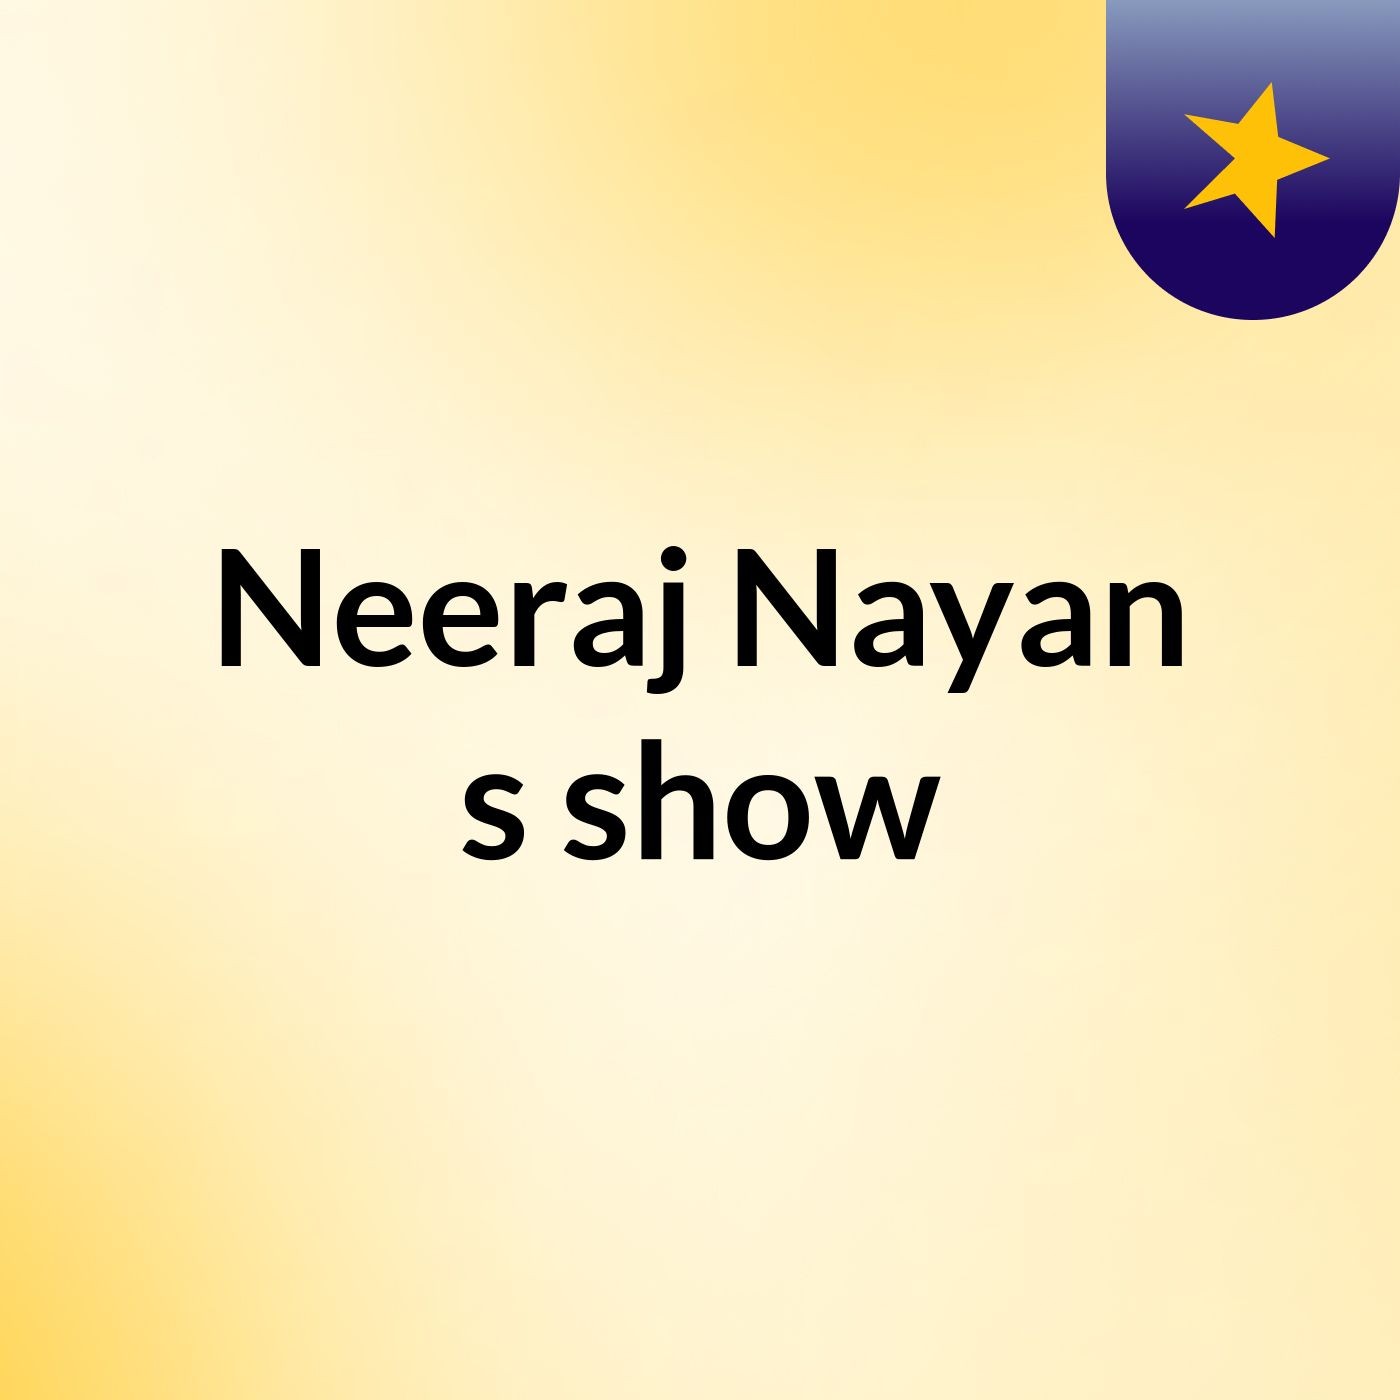 Neeraj Nayan's show